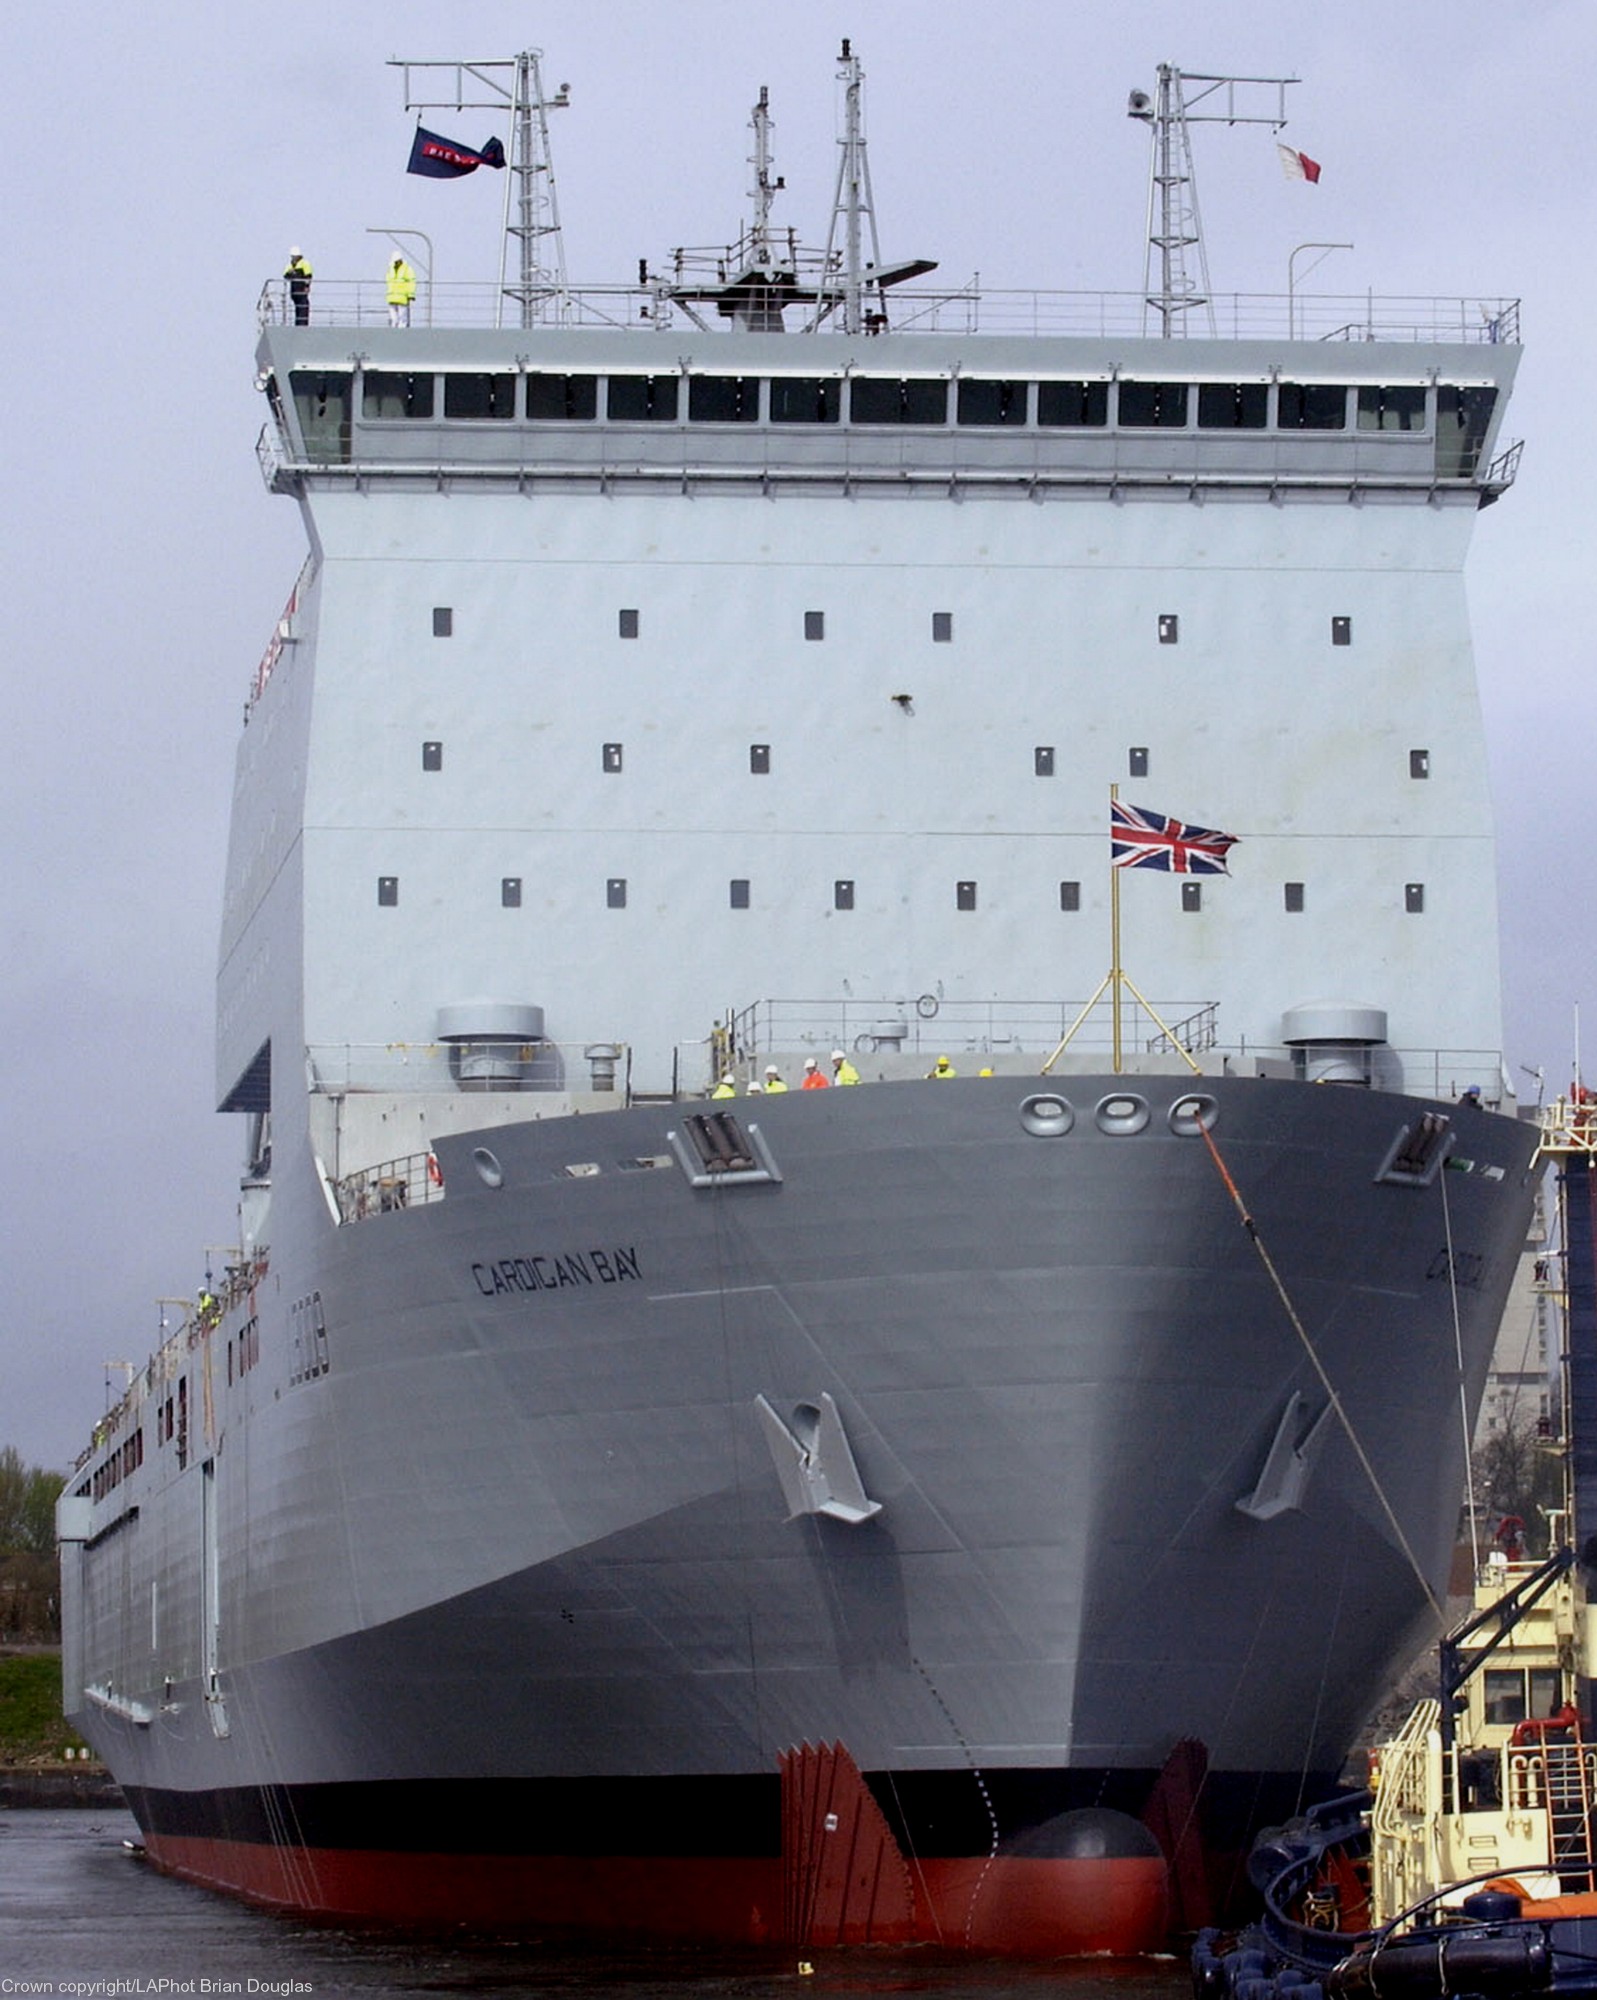 l-3009 rfa cardigan bay class dock landing ship lsd royal navy fleet auxilary 08